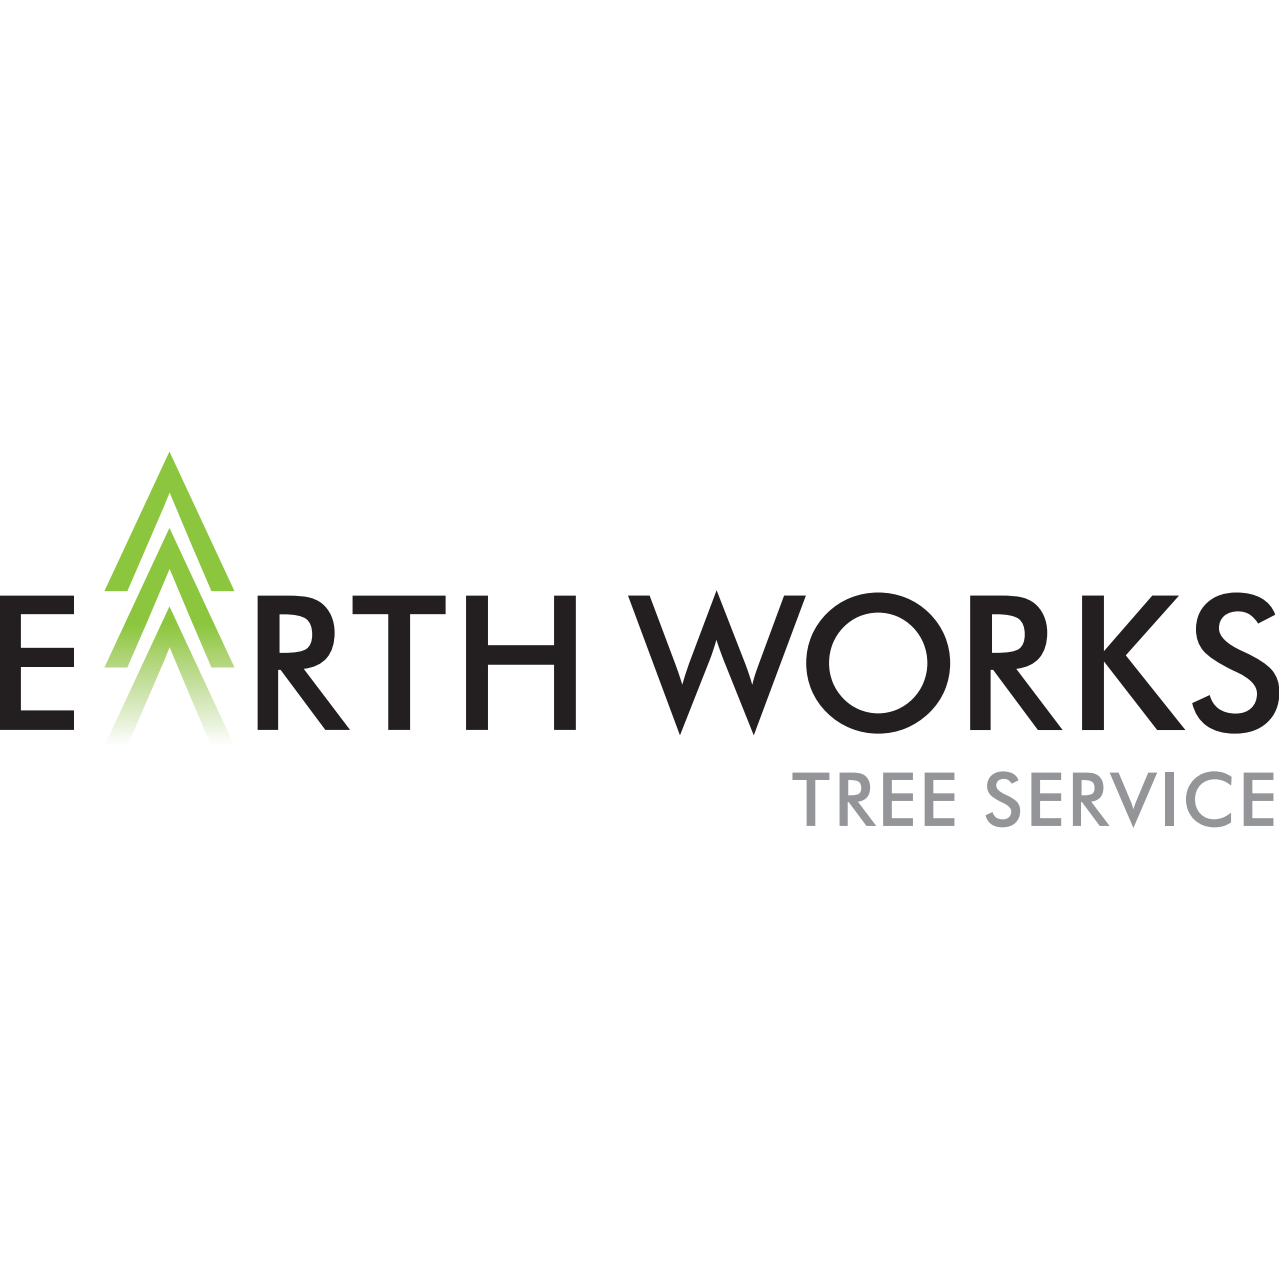 Earthworks Tree Service - Mount Vernon, WA 98274 - (360)510-5355 | ShowMeLocal.com